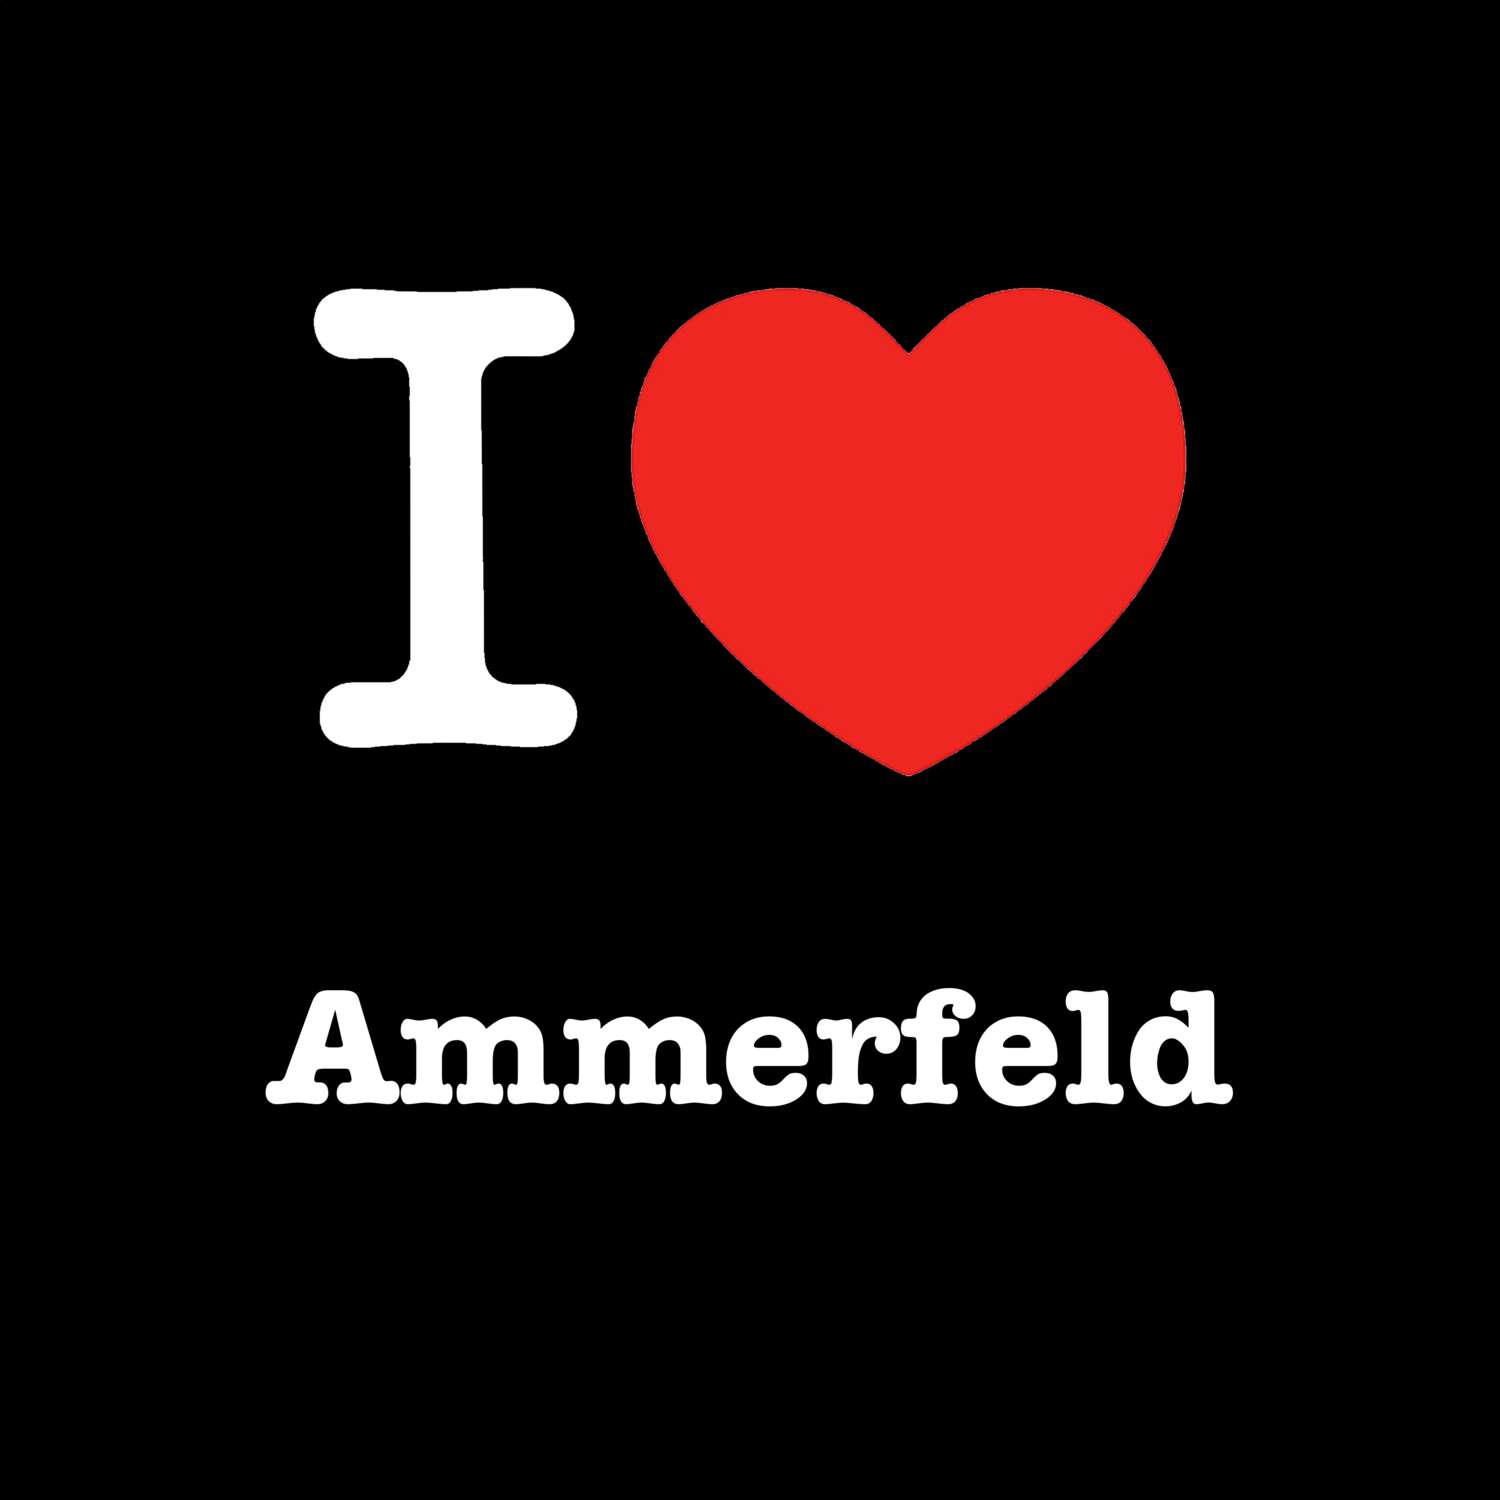 Ammerfeld T-Shirt »I love«